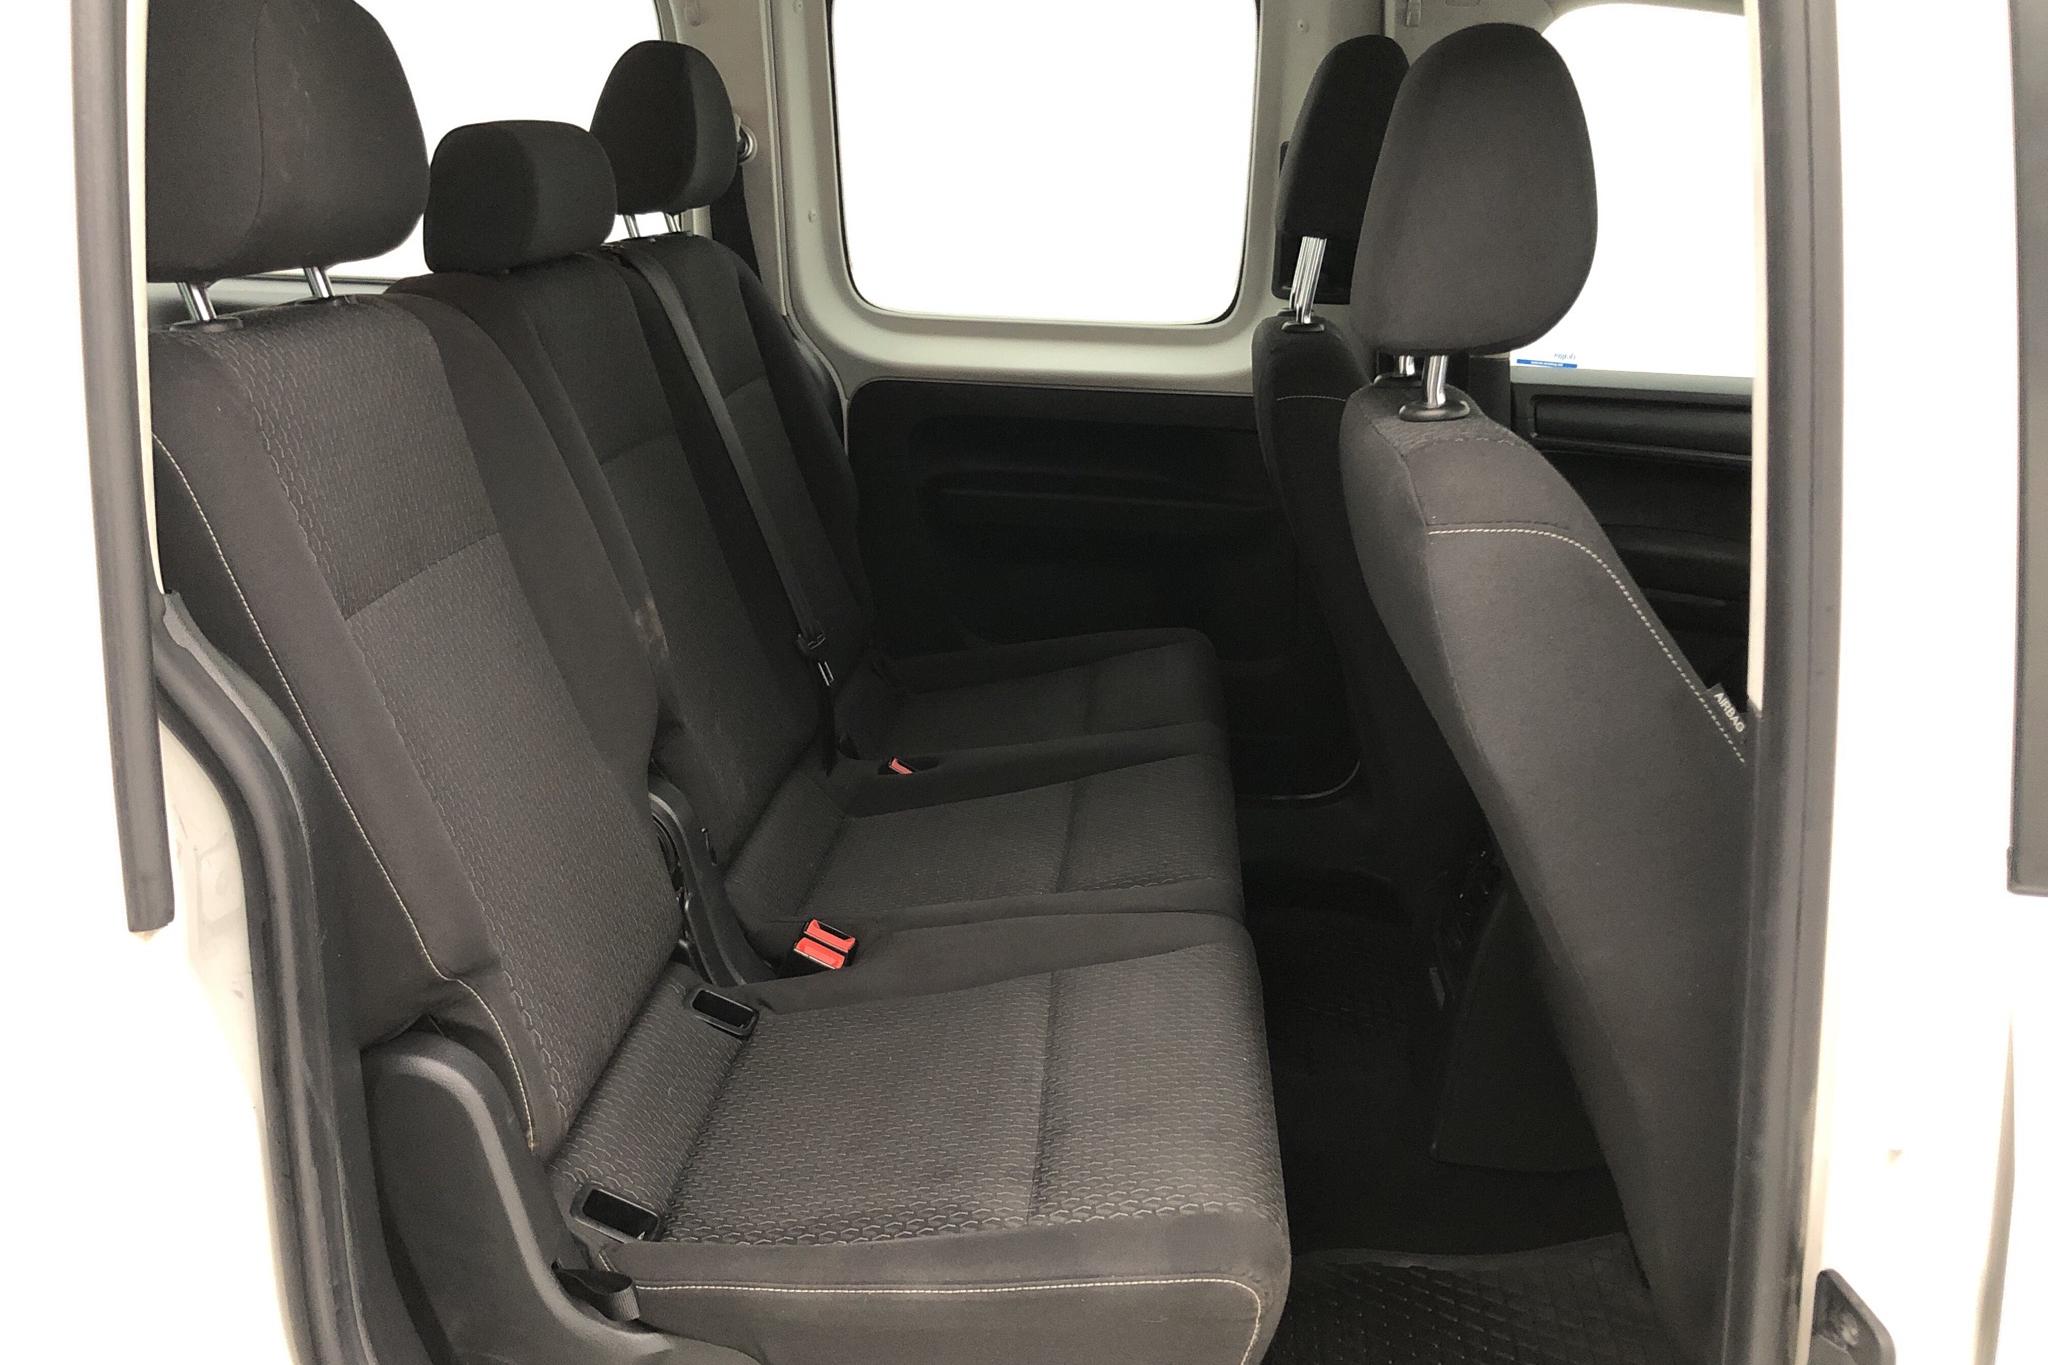 VW Caddy MPV Maxi 1.4 TGI (110hk) - 138 020 km - Automatic - white - 2017